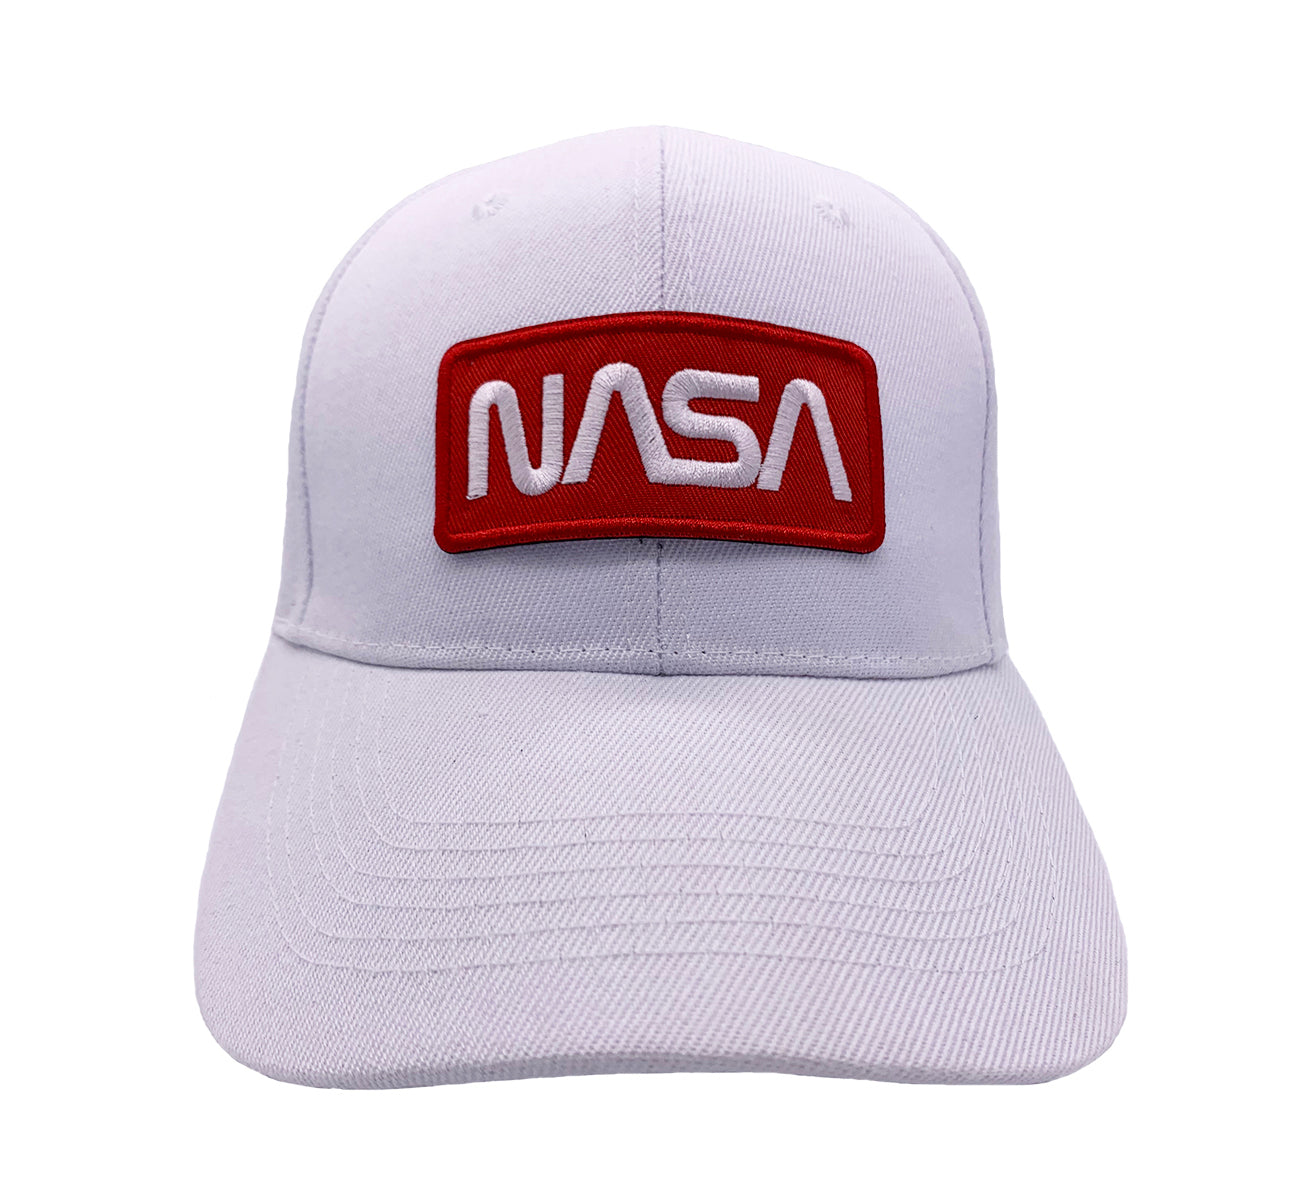 CORIRESHA NASA Baseball Cap